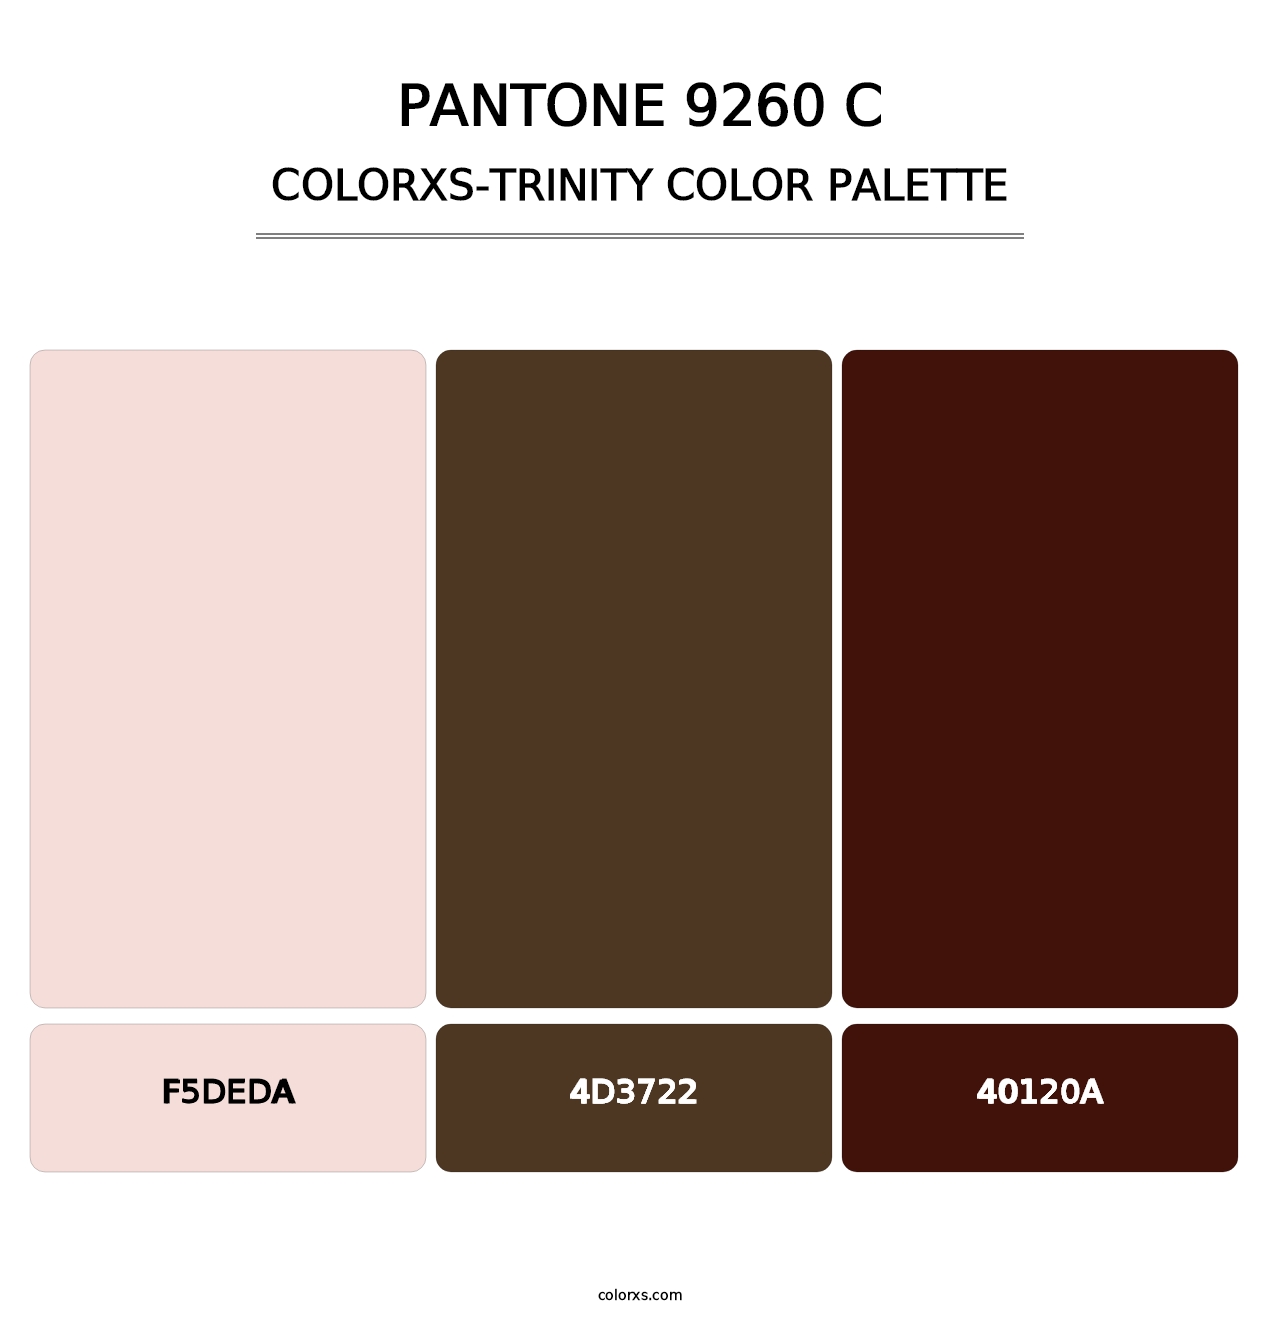 PANTONE 9260 C - Colorxs Trinity Palette